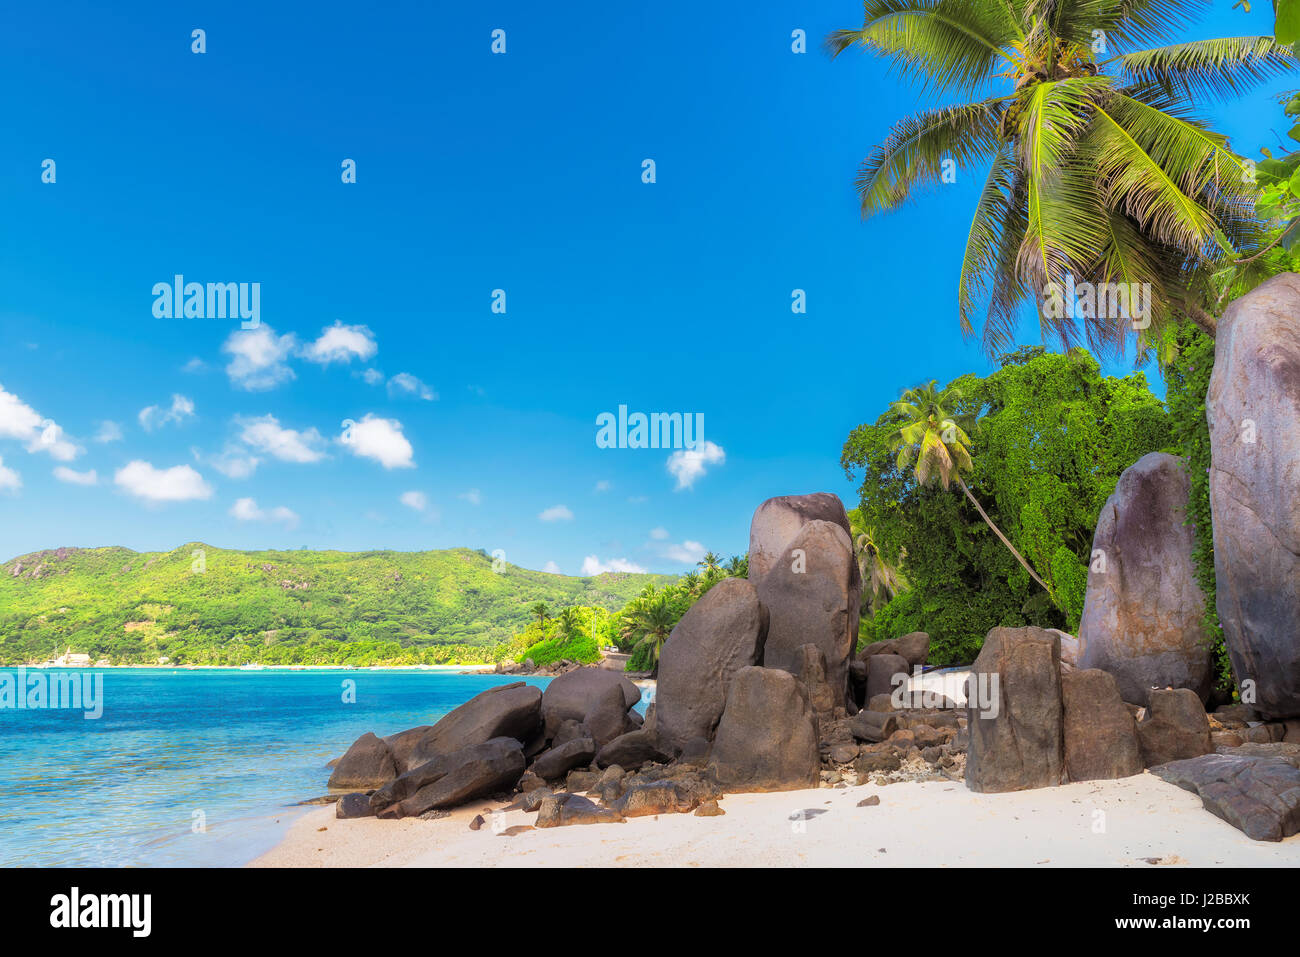 Palm trees and granite rocks on the beach, Mahe island, Seychelles Stock Photo